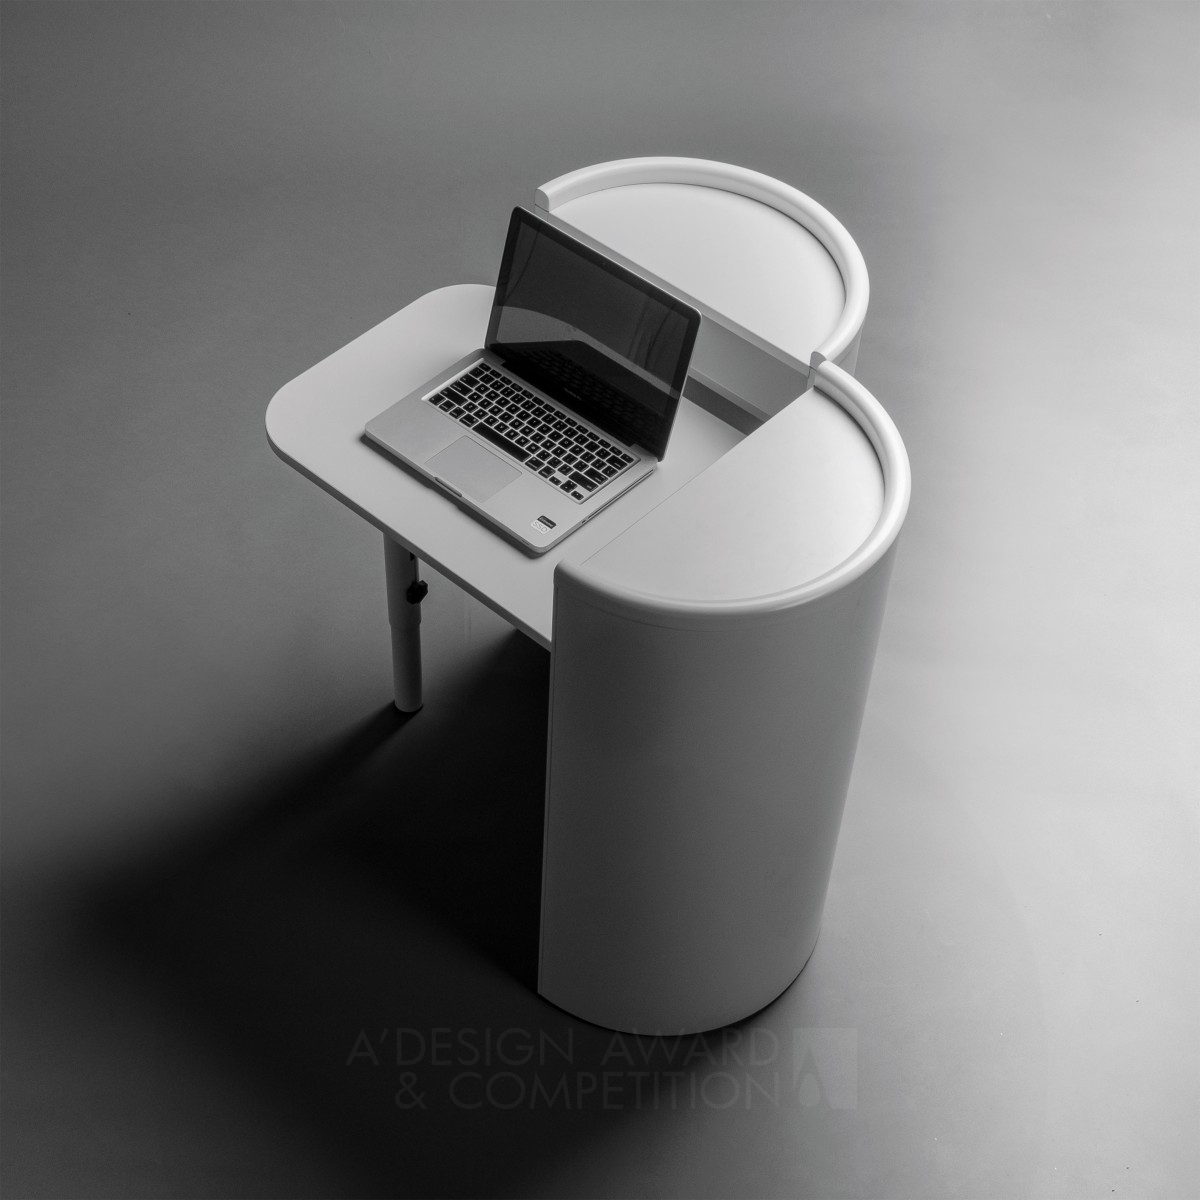 Cilindro: A Multifunctional Desk Designed by Miguel Arruda